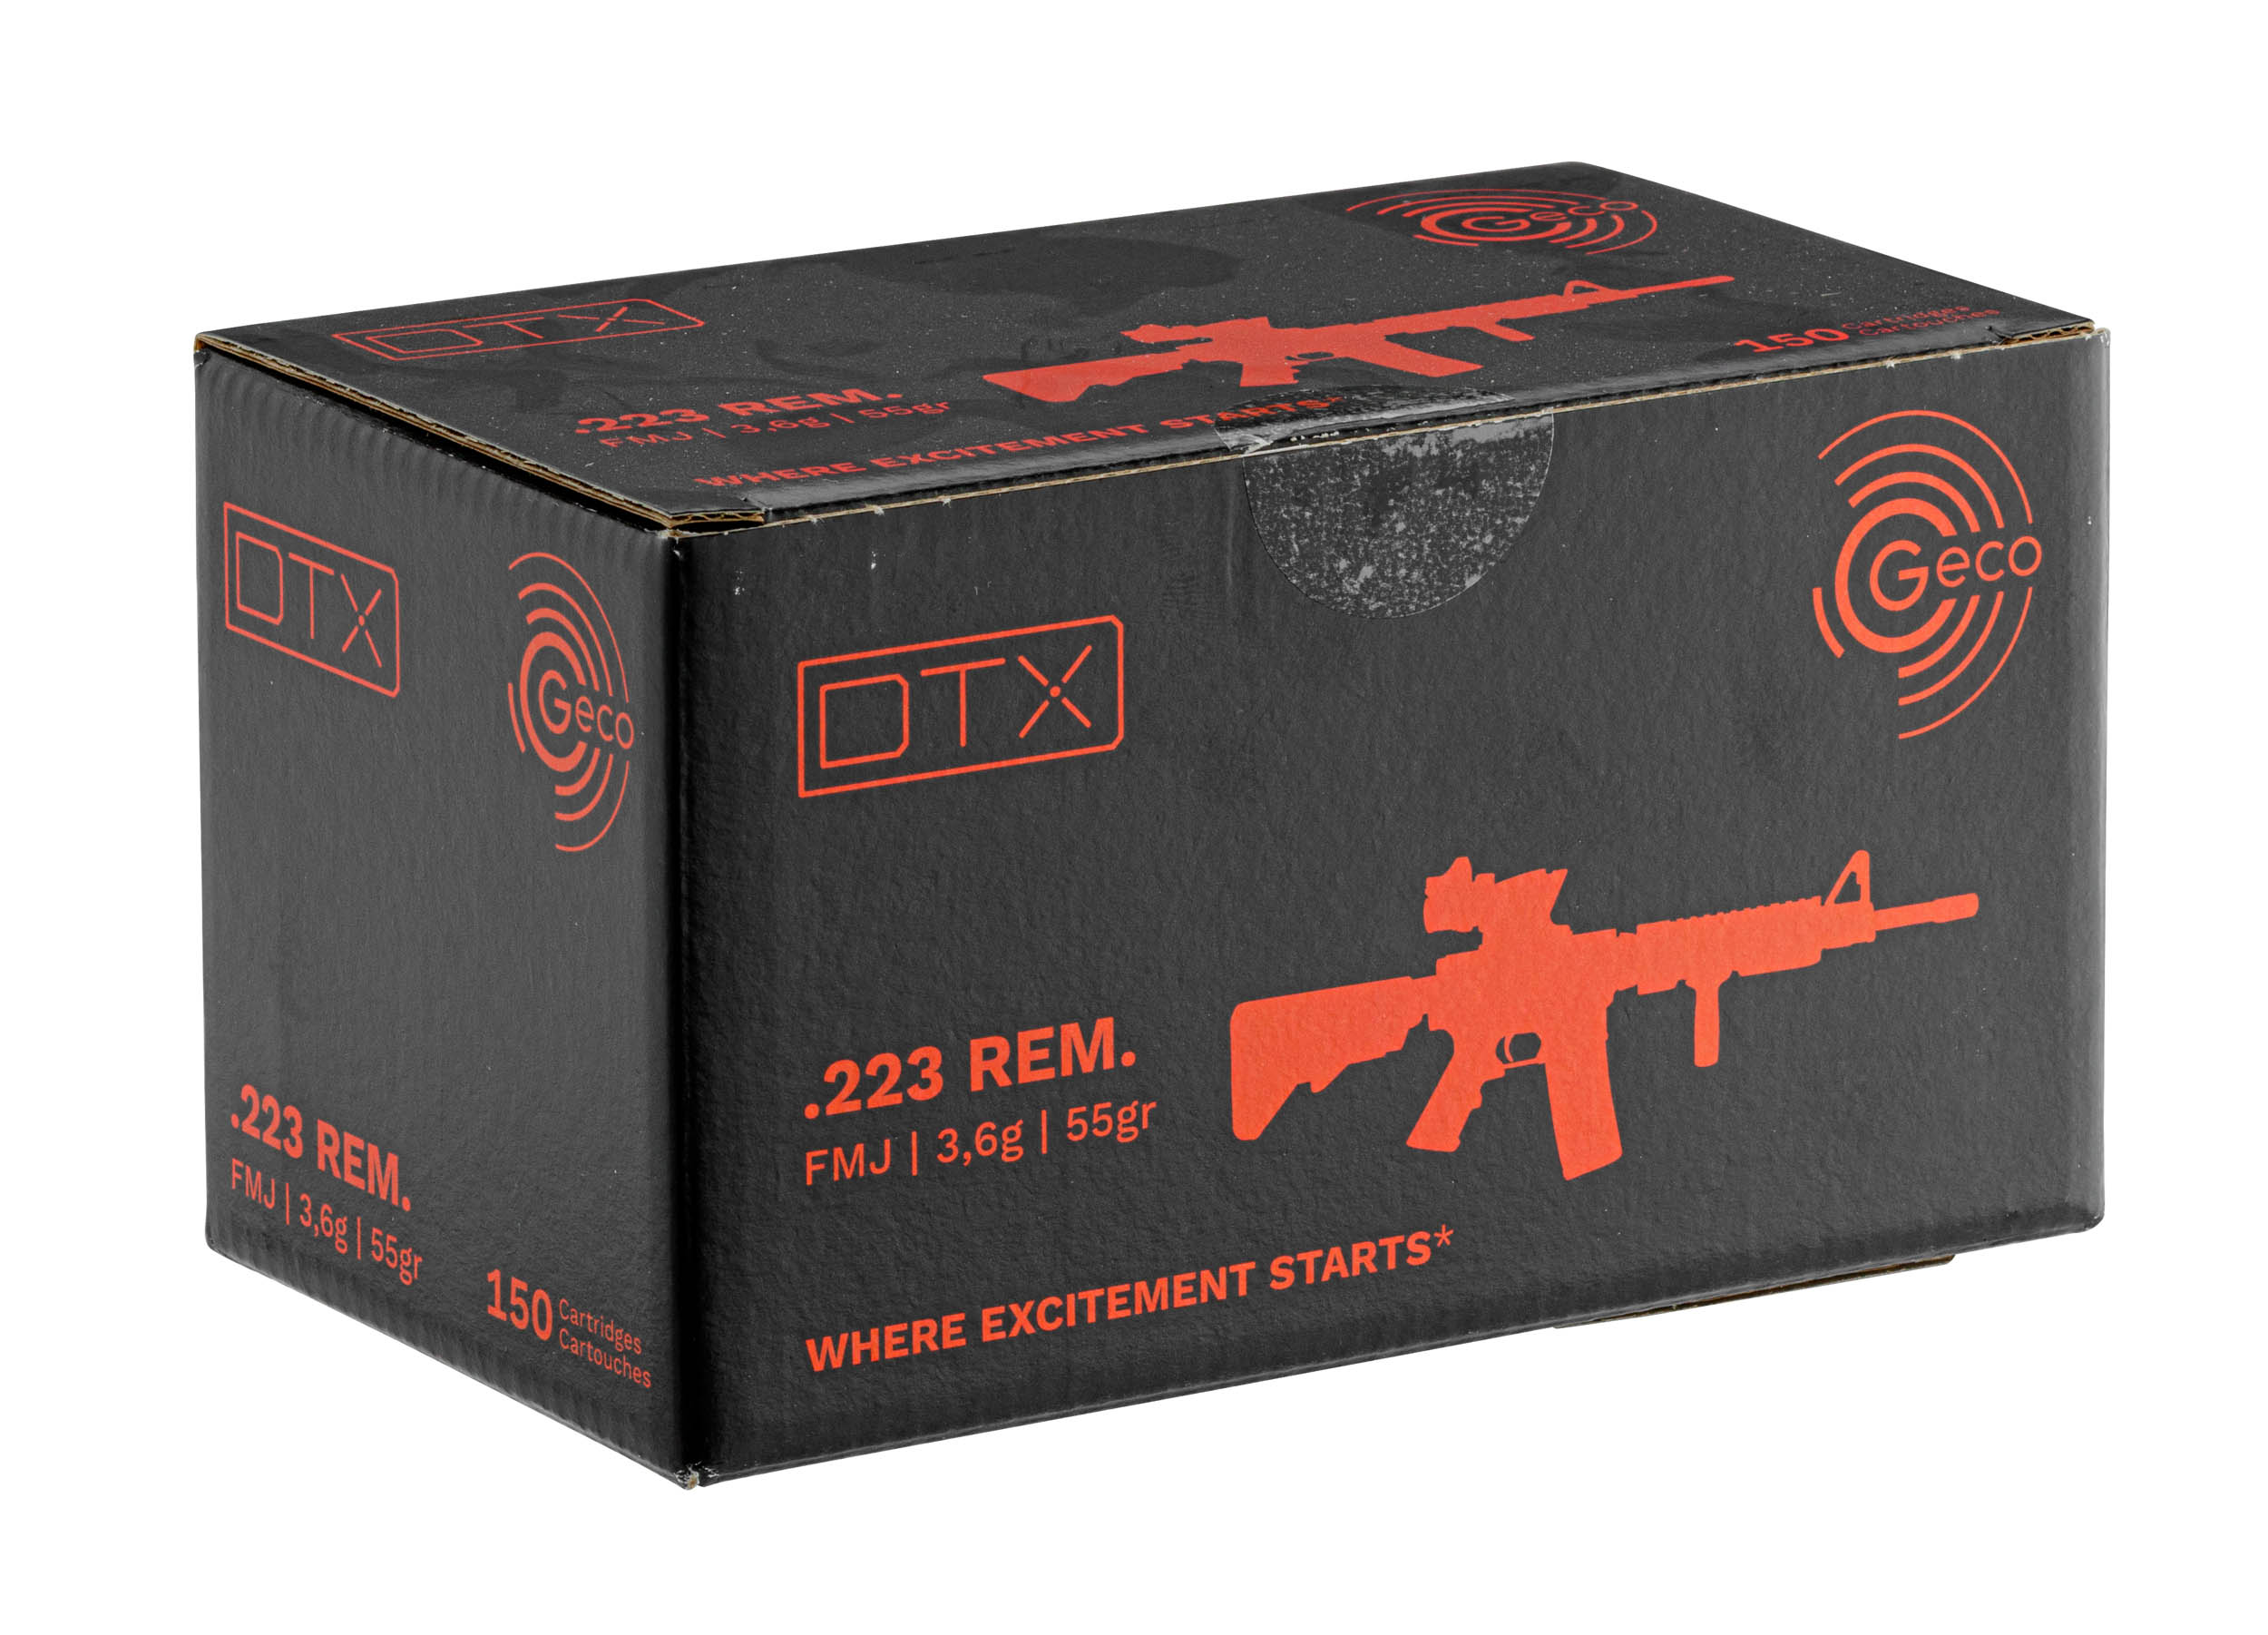 MR860-01 Munitions Geco calibre 223 Rem DTX - Boite de 20 - MR860